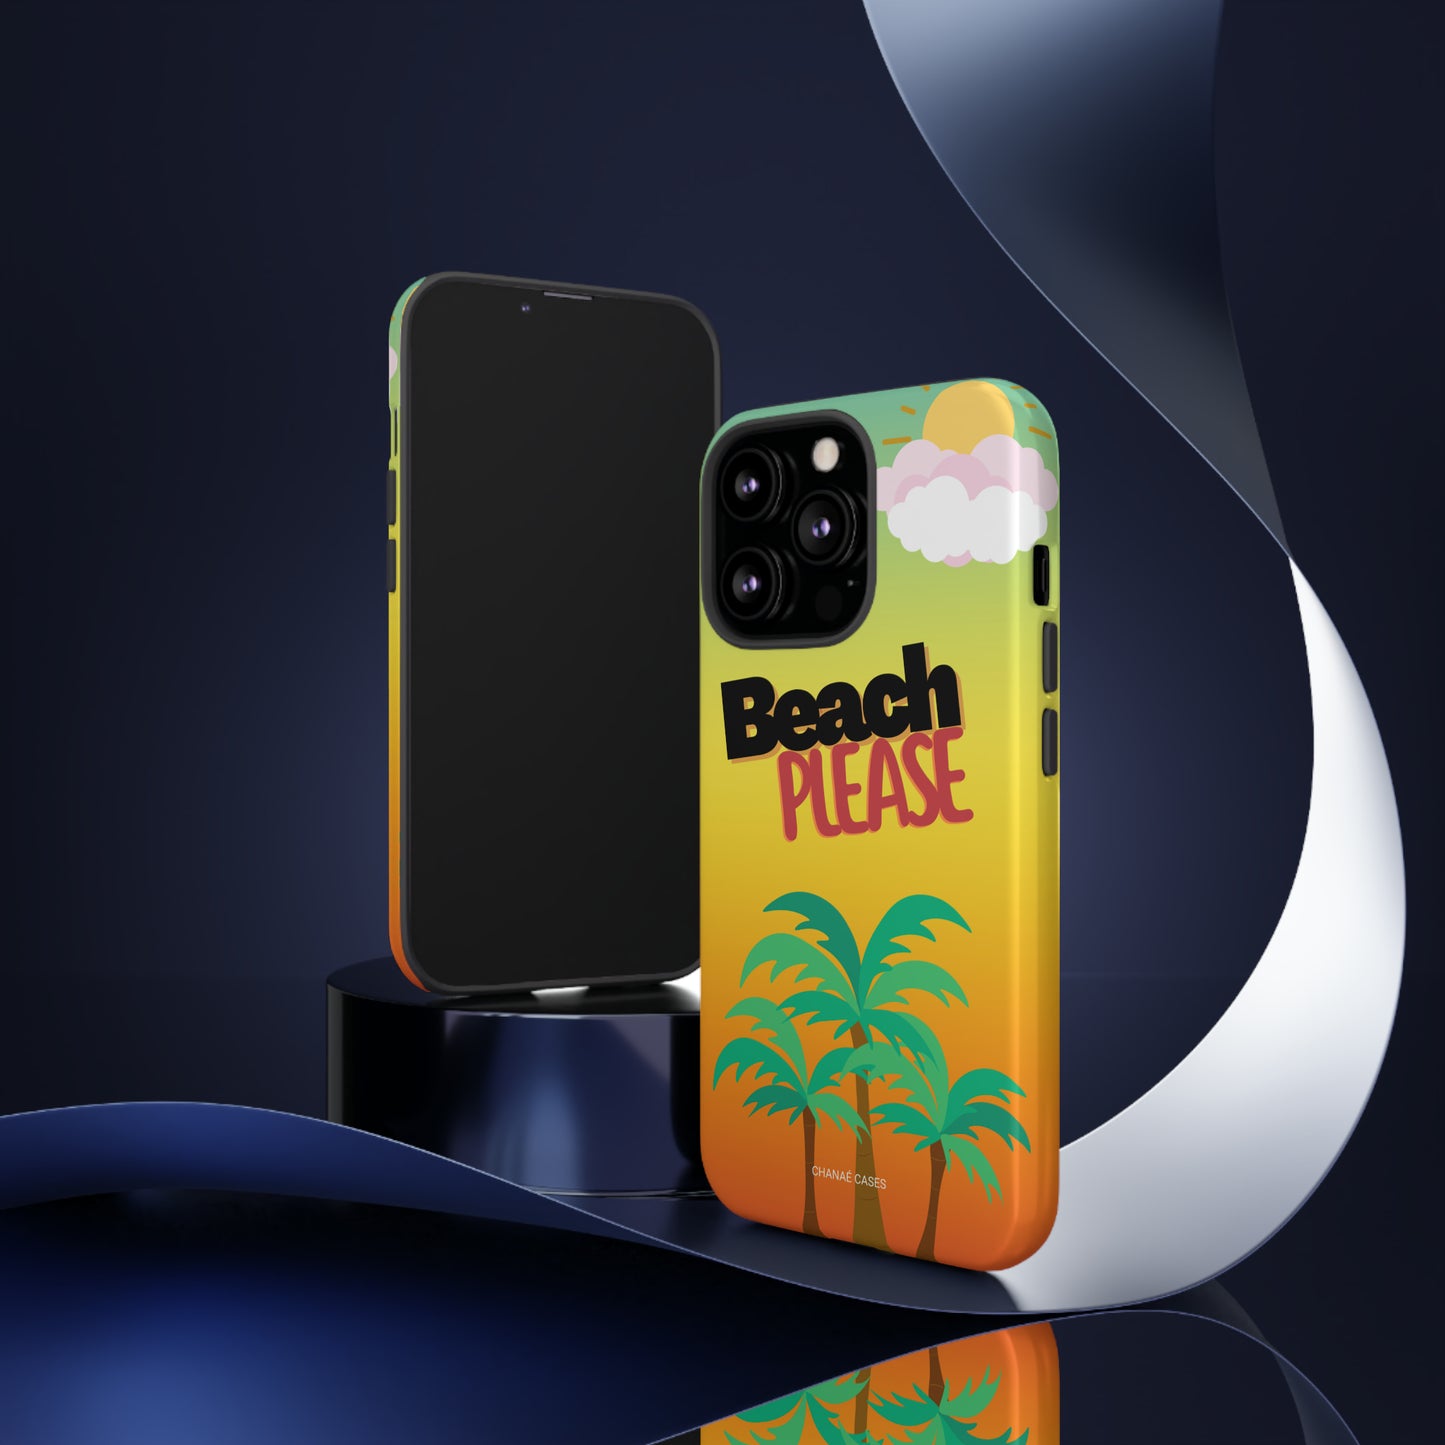 Beach Please iPhone "Tough" Case (Multi)